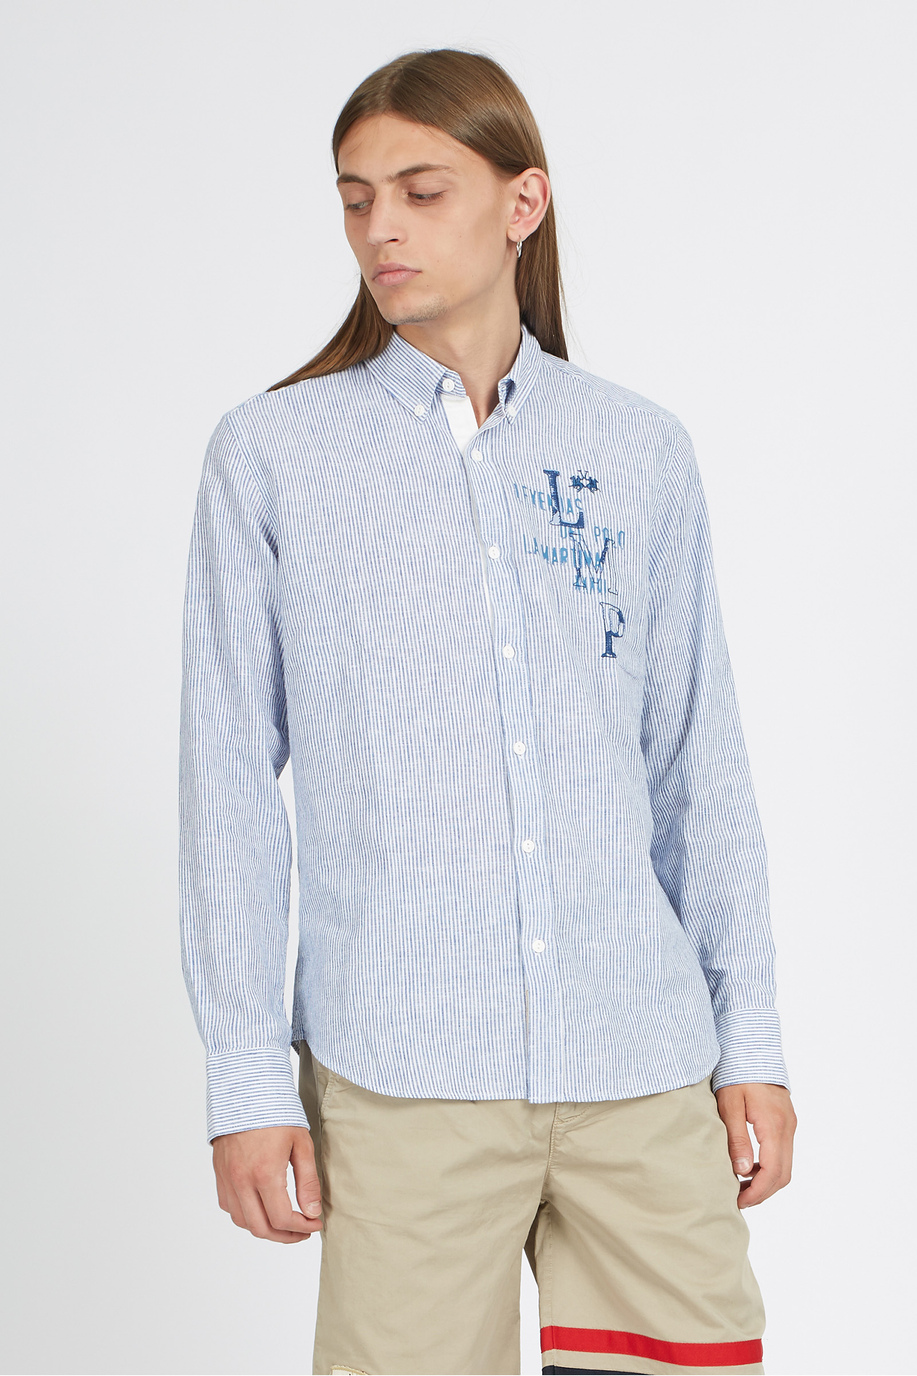 Men's long-sleeved shirt in regular fit linen-cotton blend - Vinh - Leyendas del Polo | La Martina - Official Online Shop